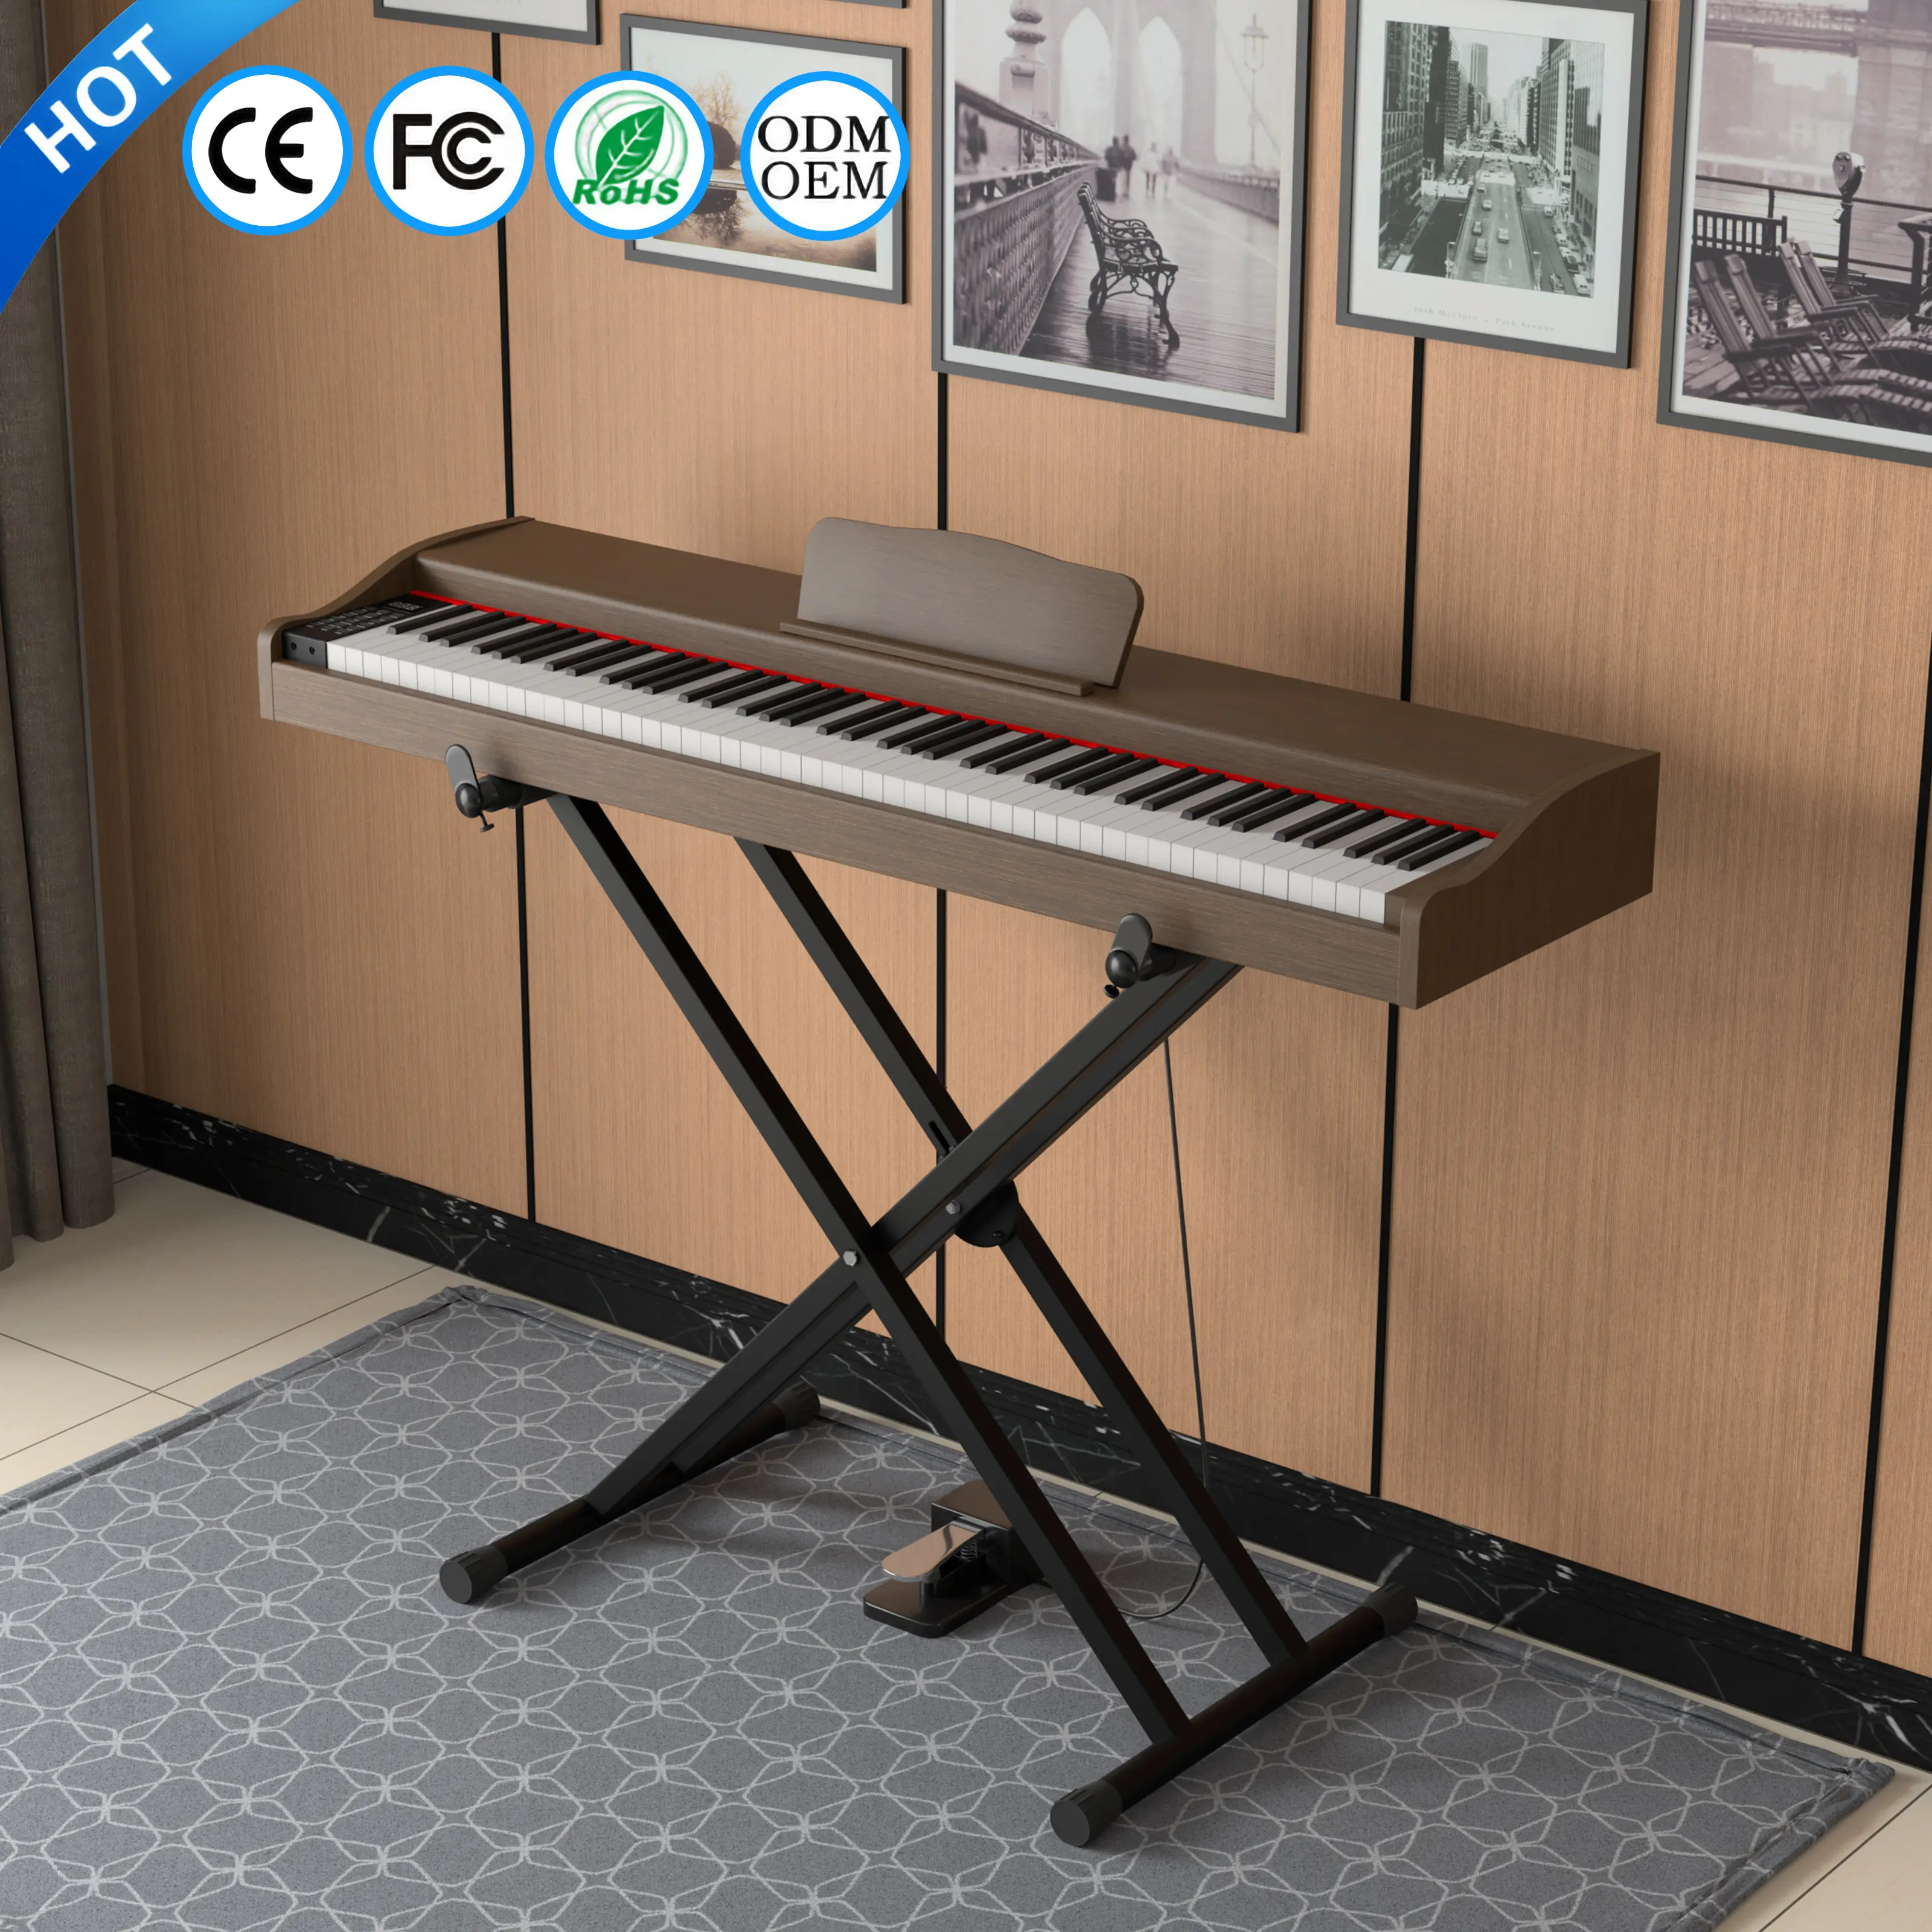 Venth piano digital, piano listrik profesional dengan 88 kunci untuk instrumen musik digital